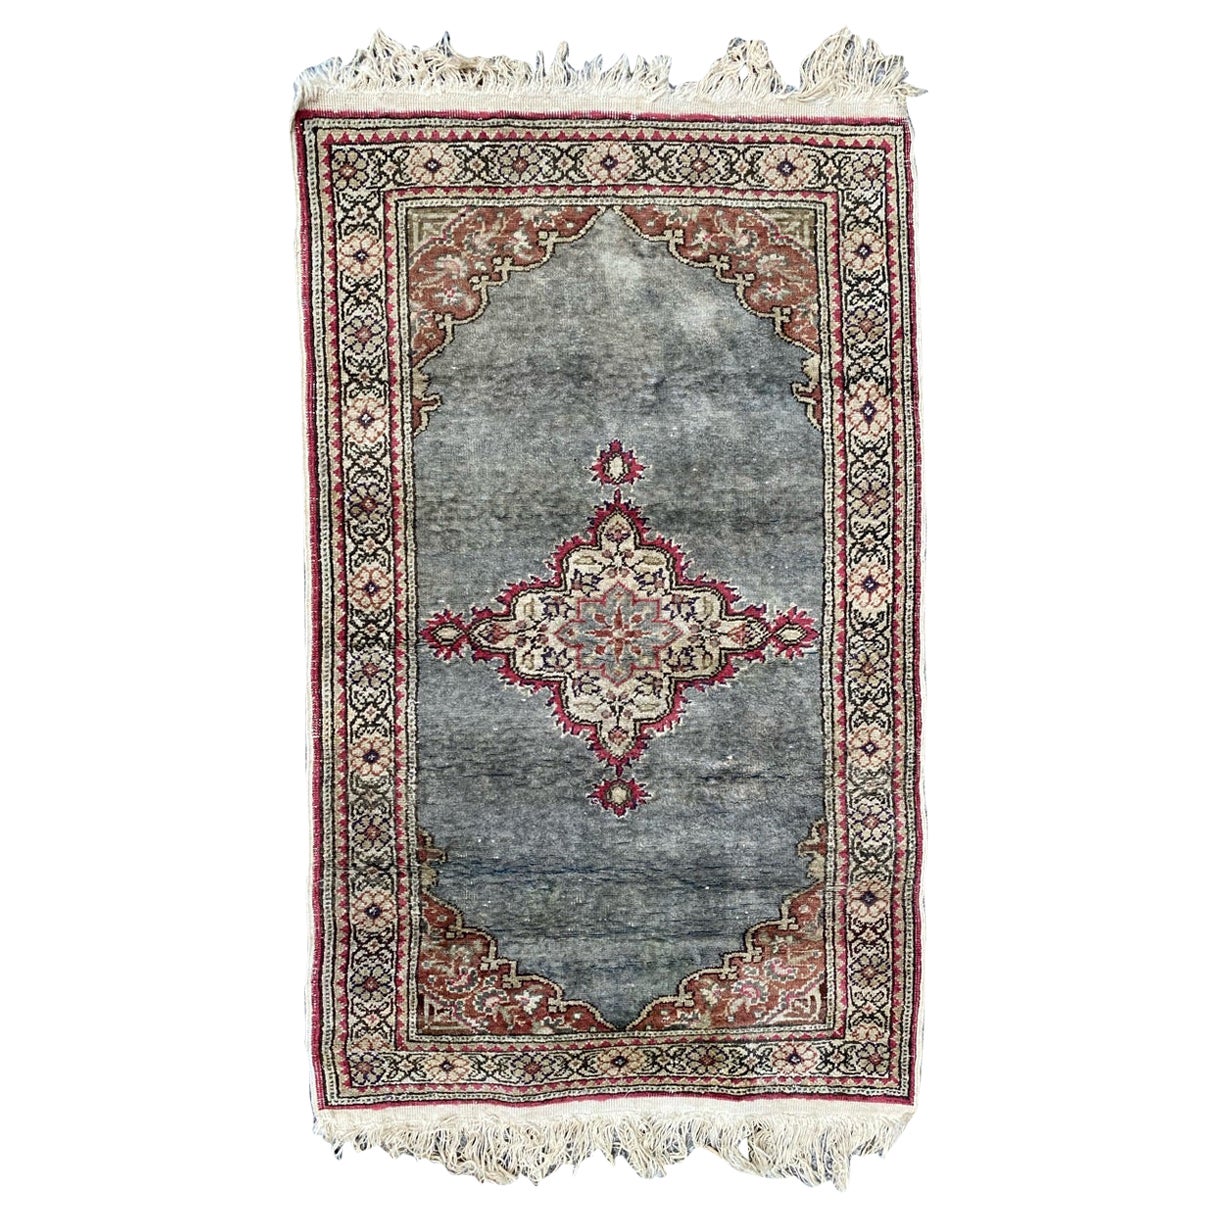 Bobyrug’s Little Vintage Turkish Kayseri Silk and Cotton Rug